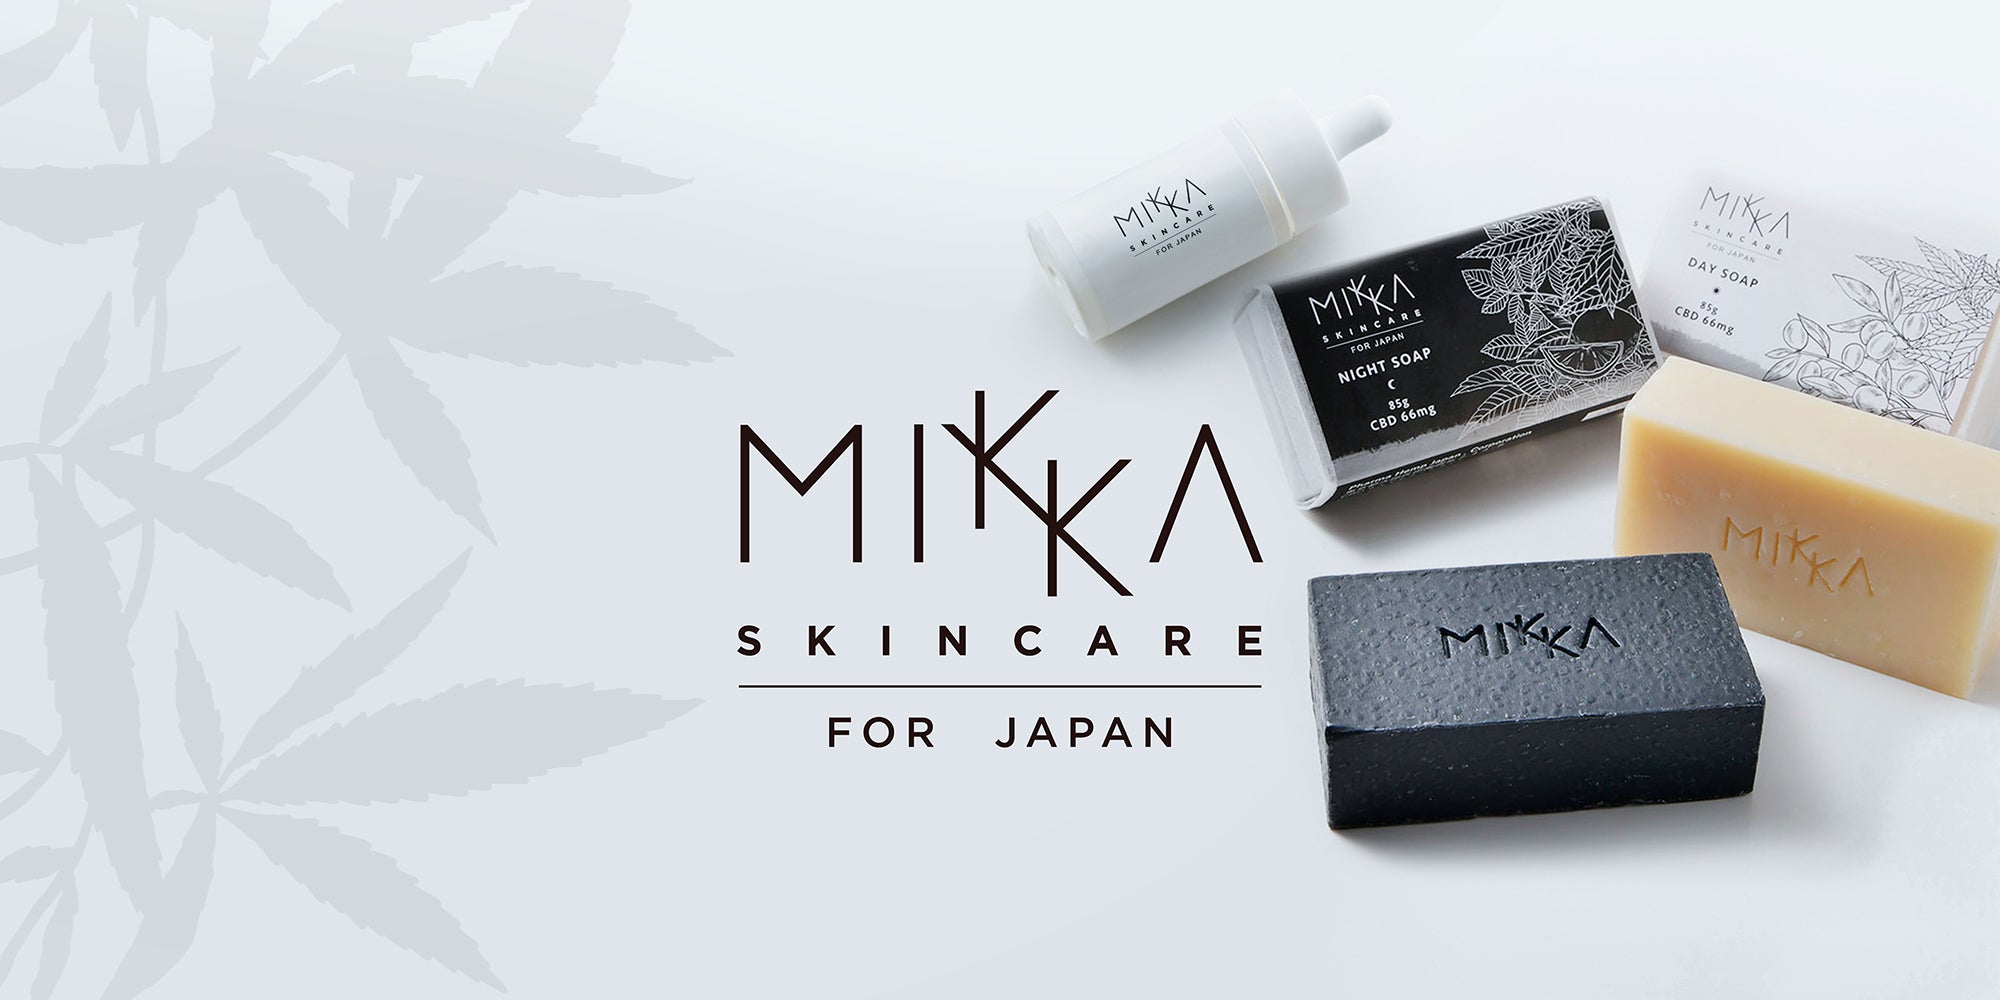 MIKKA SKIN CARE FOR JAPAN